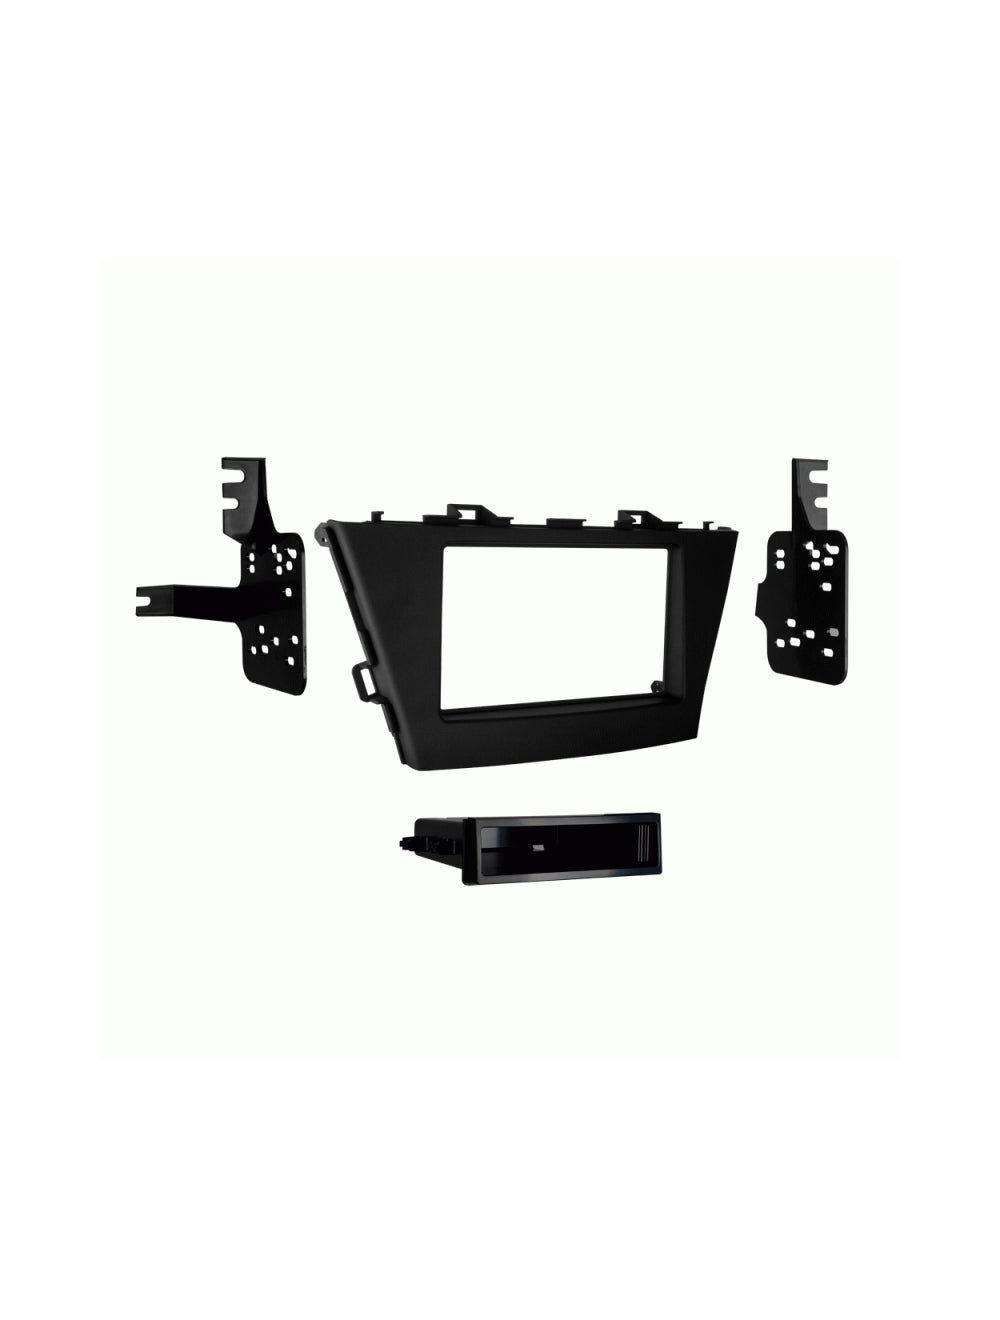 Metra 99-8243B Single DIN Installation Dash Kit for Toyota Prius V 2012-Up (Black)